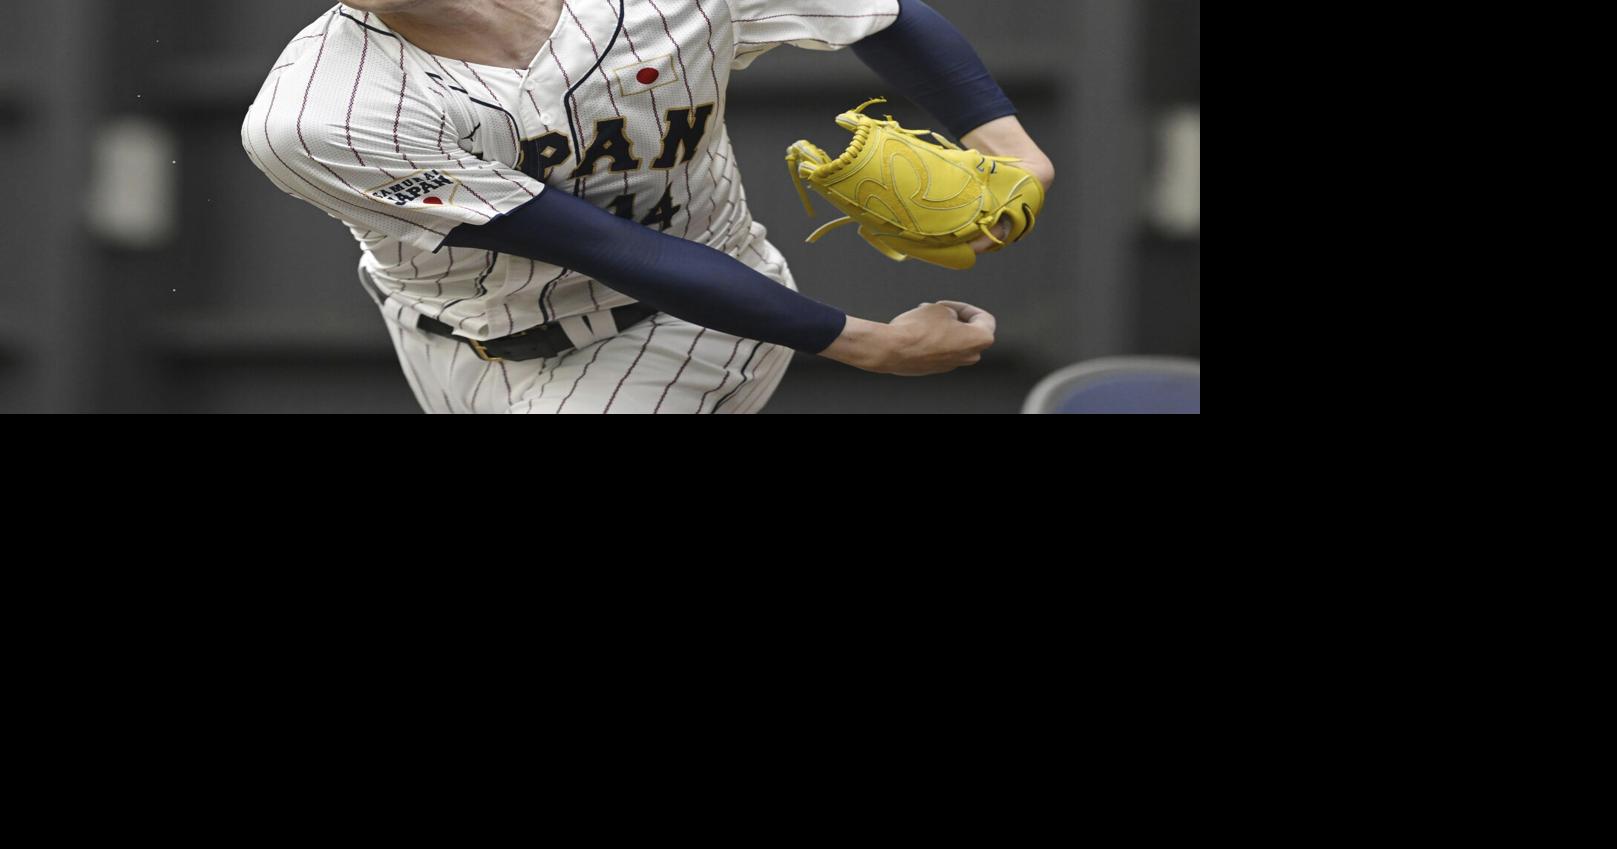 Pitcher Roki Sasaki next 'big thing' from Japanese baseball